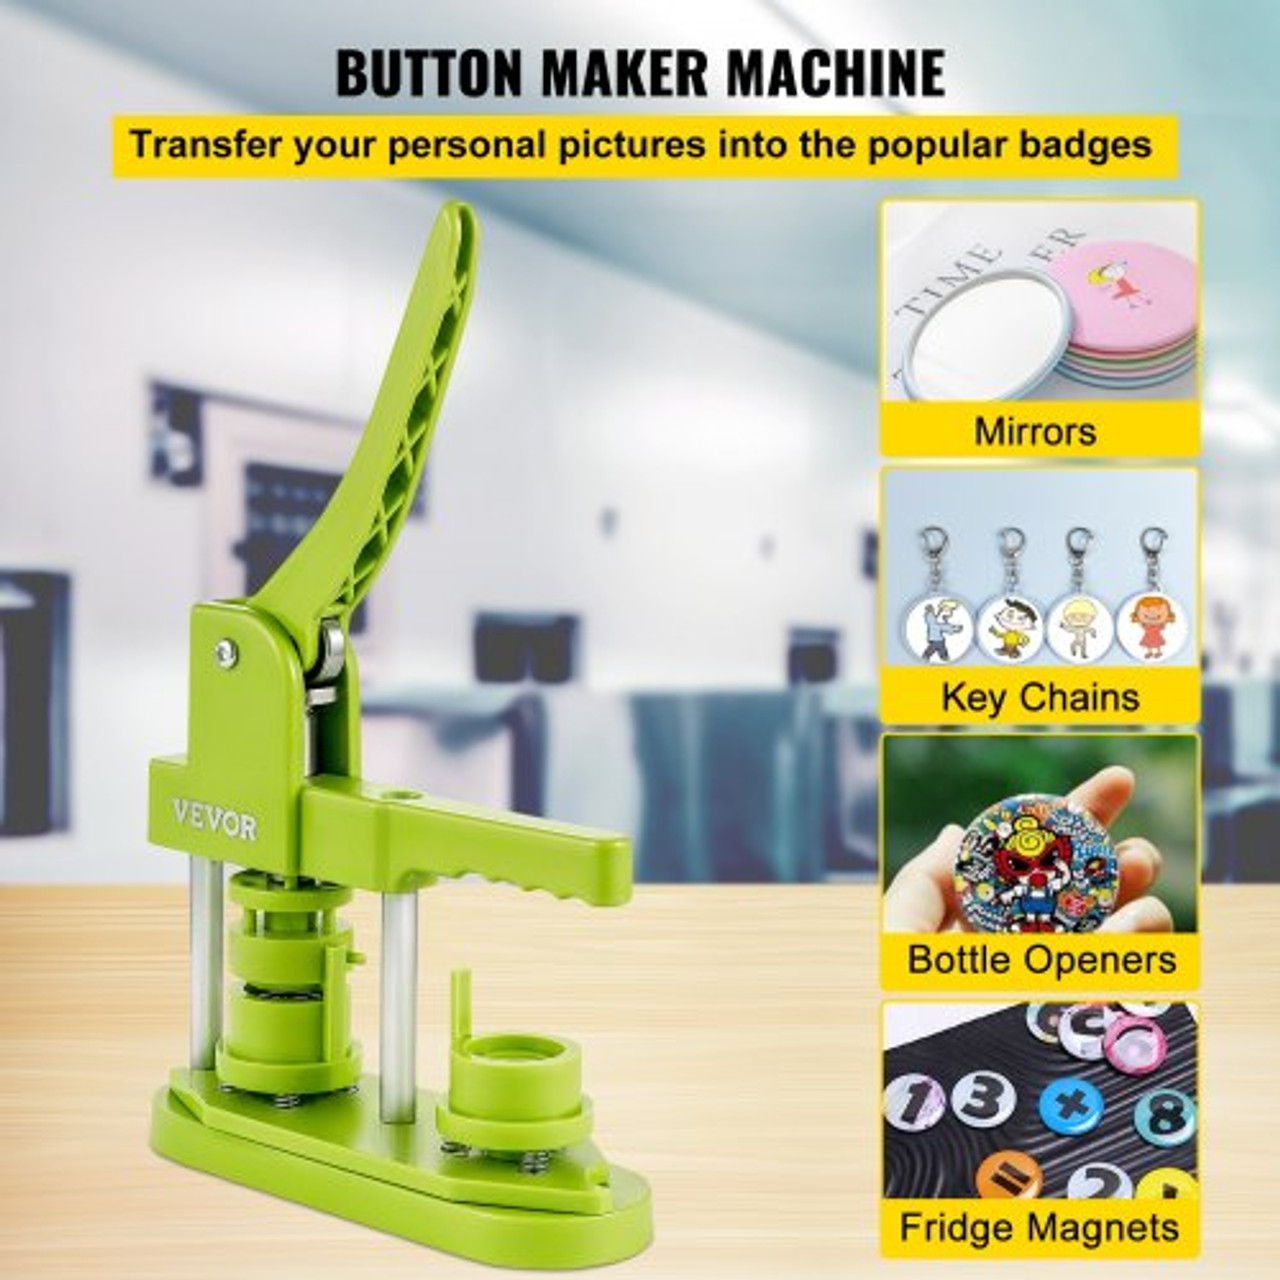 Installation-Free Button Maker Machine 25mm (1 inch) with 500pcs Button Parts Badge Press Machine,DIY Pin Button Maker Machine with Circle Cutter